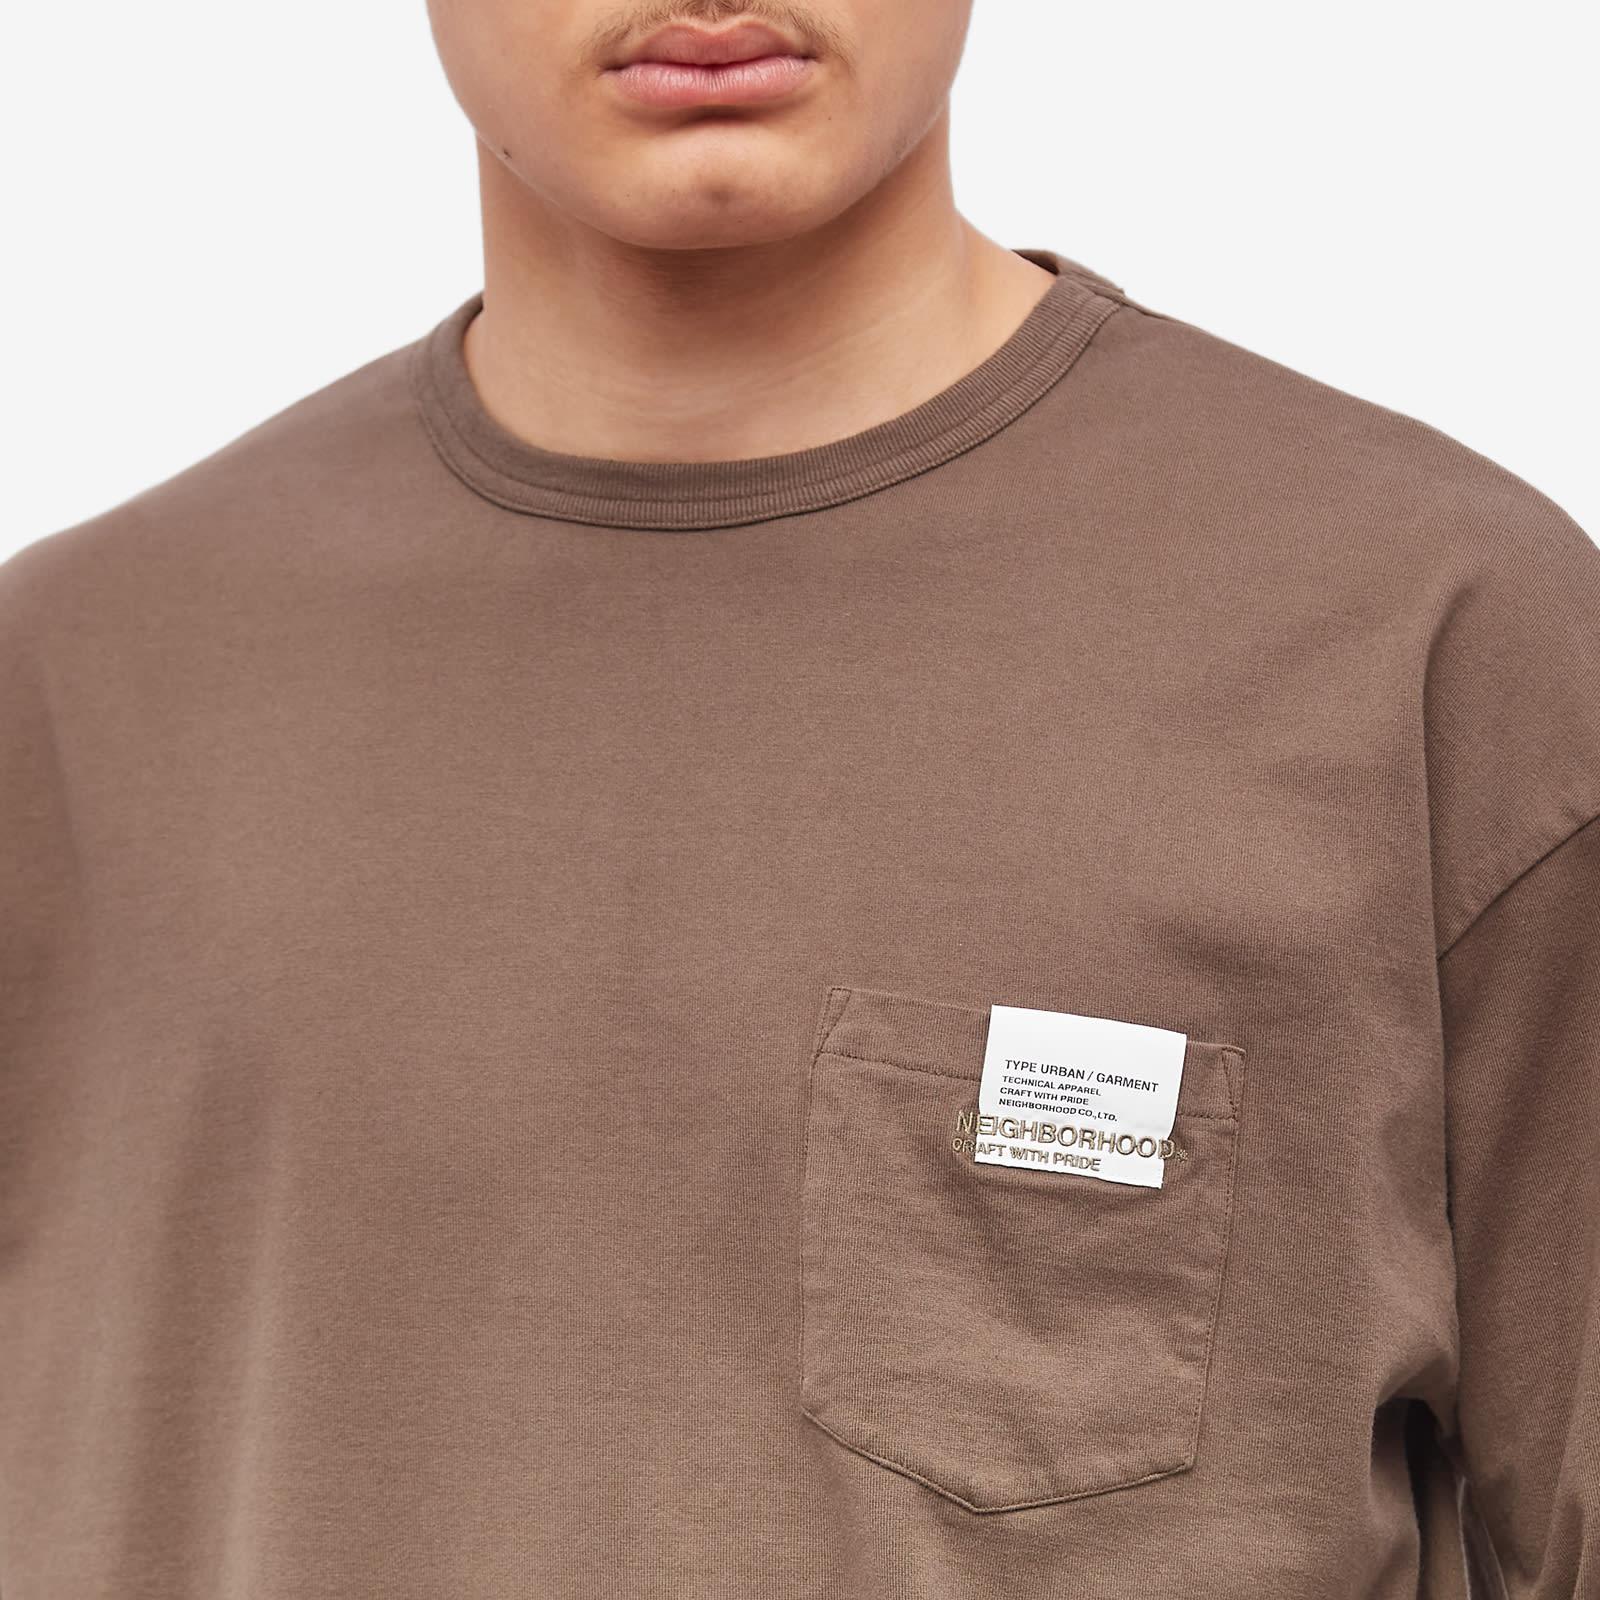 Long in Sleeve for Classic | T-shirt Pocket Men Lyst Brown Neighborhood